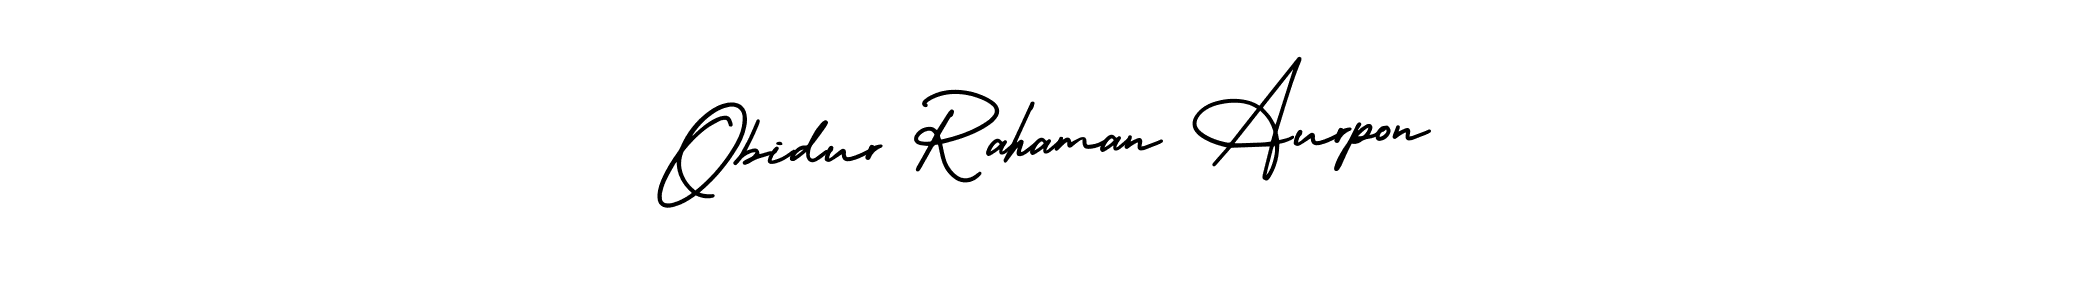 Best and Professional Signature Style for Obidur Rahaman Aurpon. AmerikaSignatureDemo-Regular Best Signature Style Collection. Obidur Rahaman Aurpon signature style 3 images and pictures png